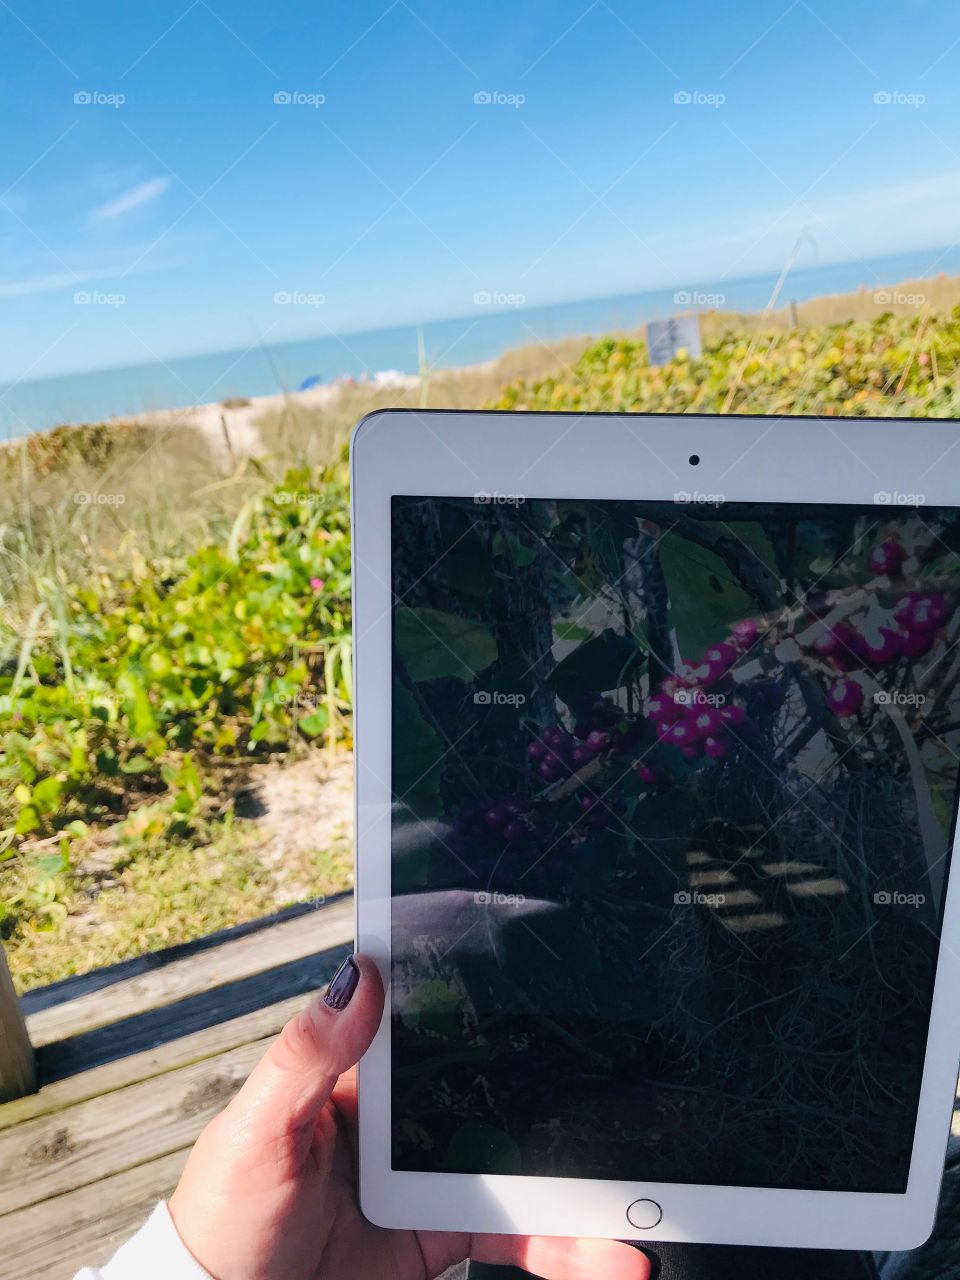 iPad by beach view 